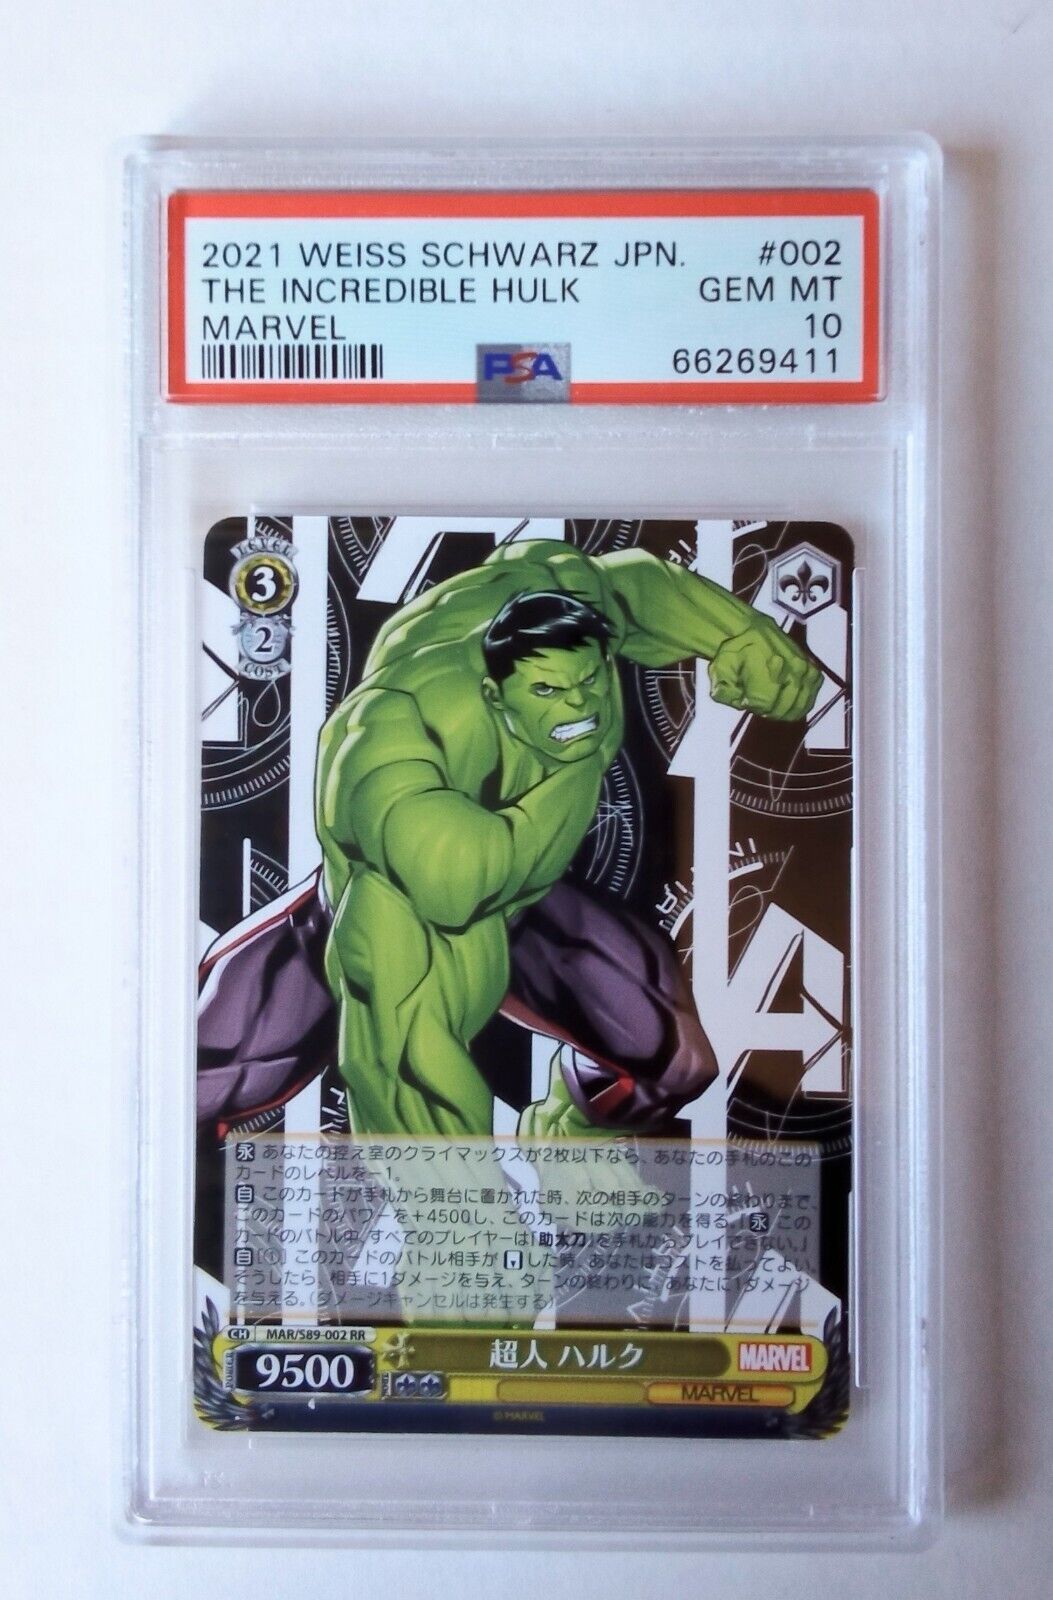  2021-Weiss Schwarz Japan -Incredible Hulk-RR-Marvel-#2-card-PSA 10